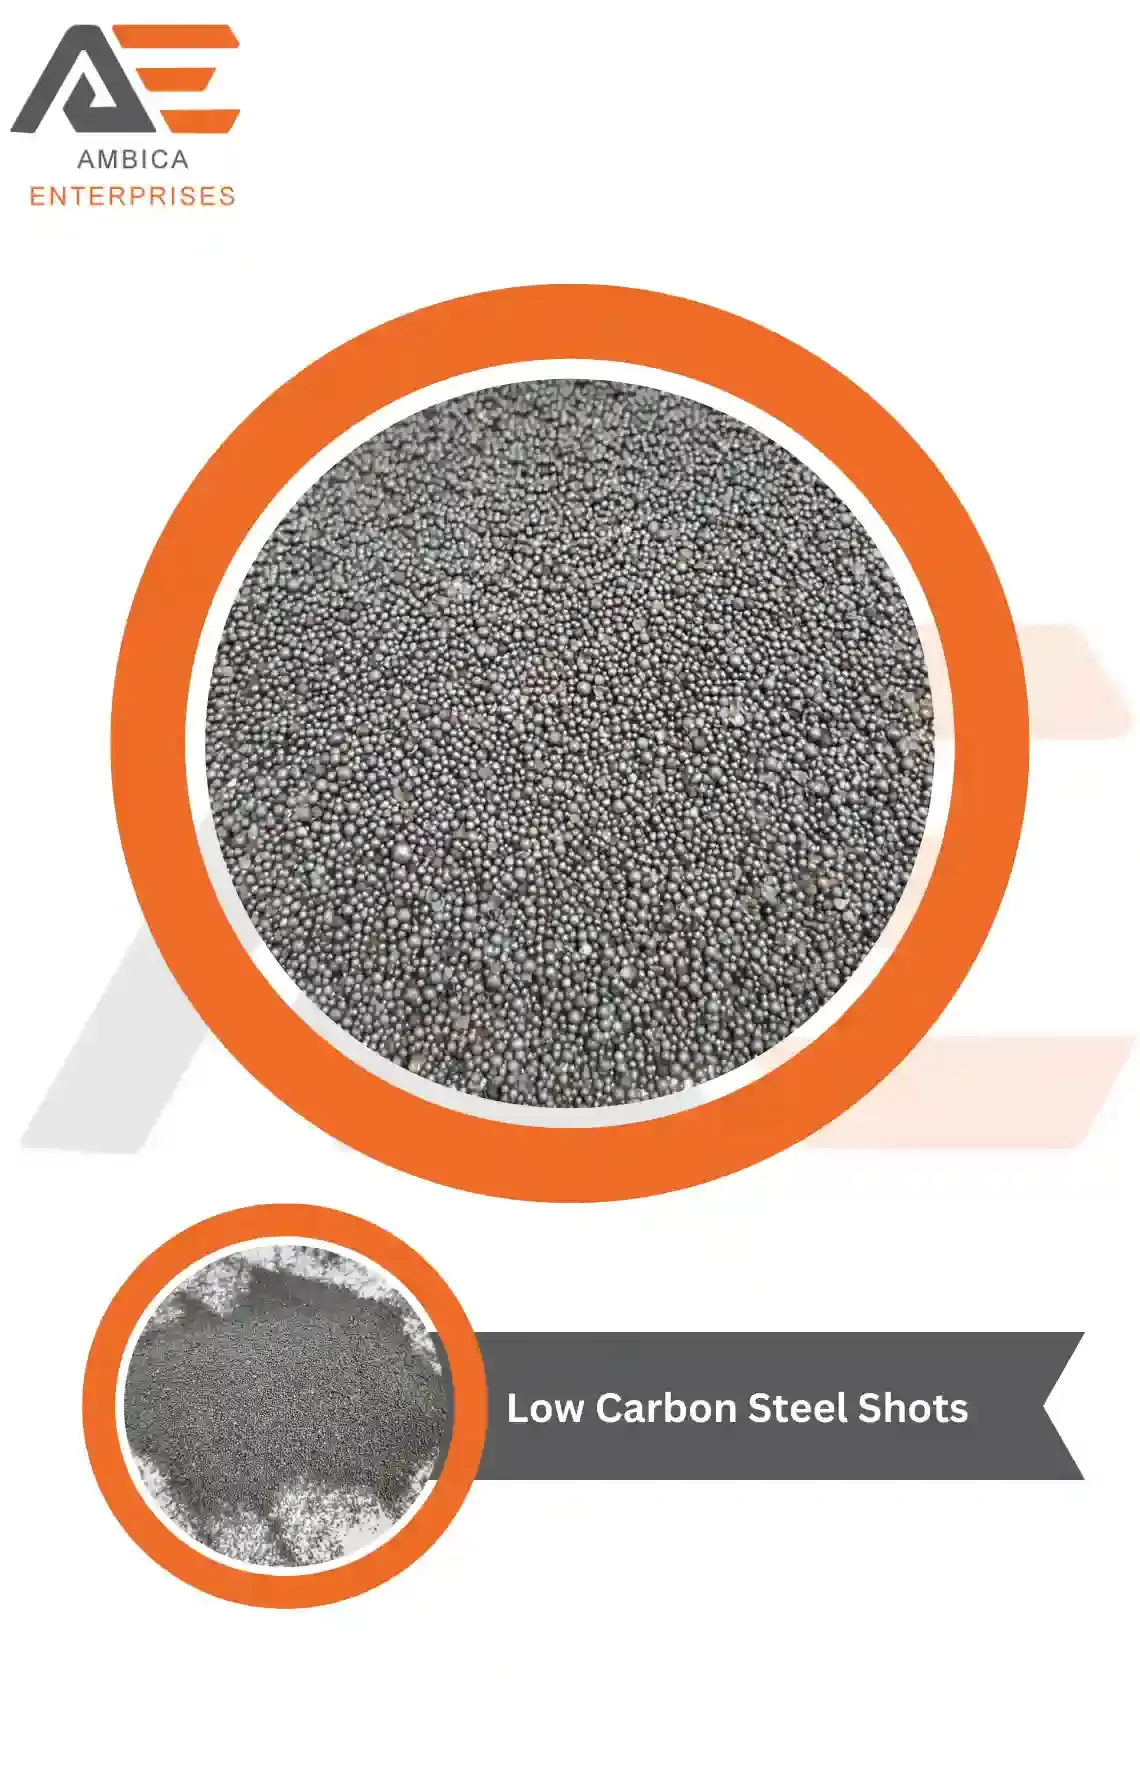 Low Carbon Steel Shots